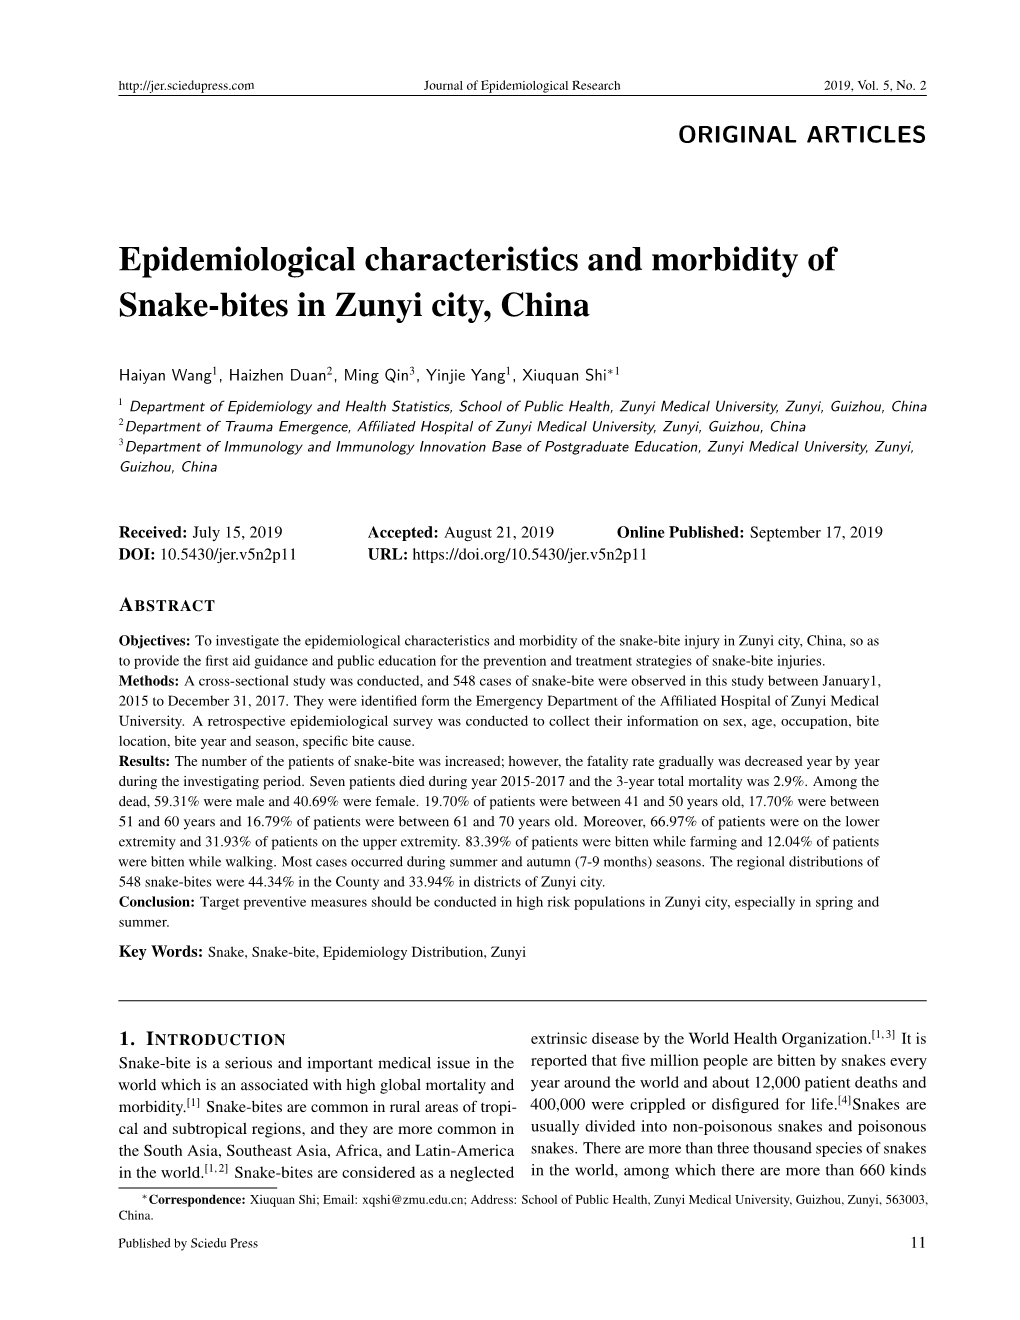 Epidemiological Characteristics and Morbidity of Snake-Bites in Zunyi City, China